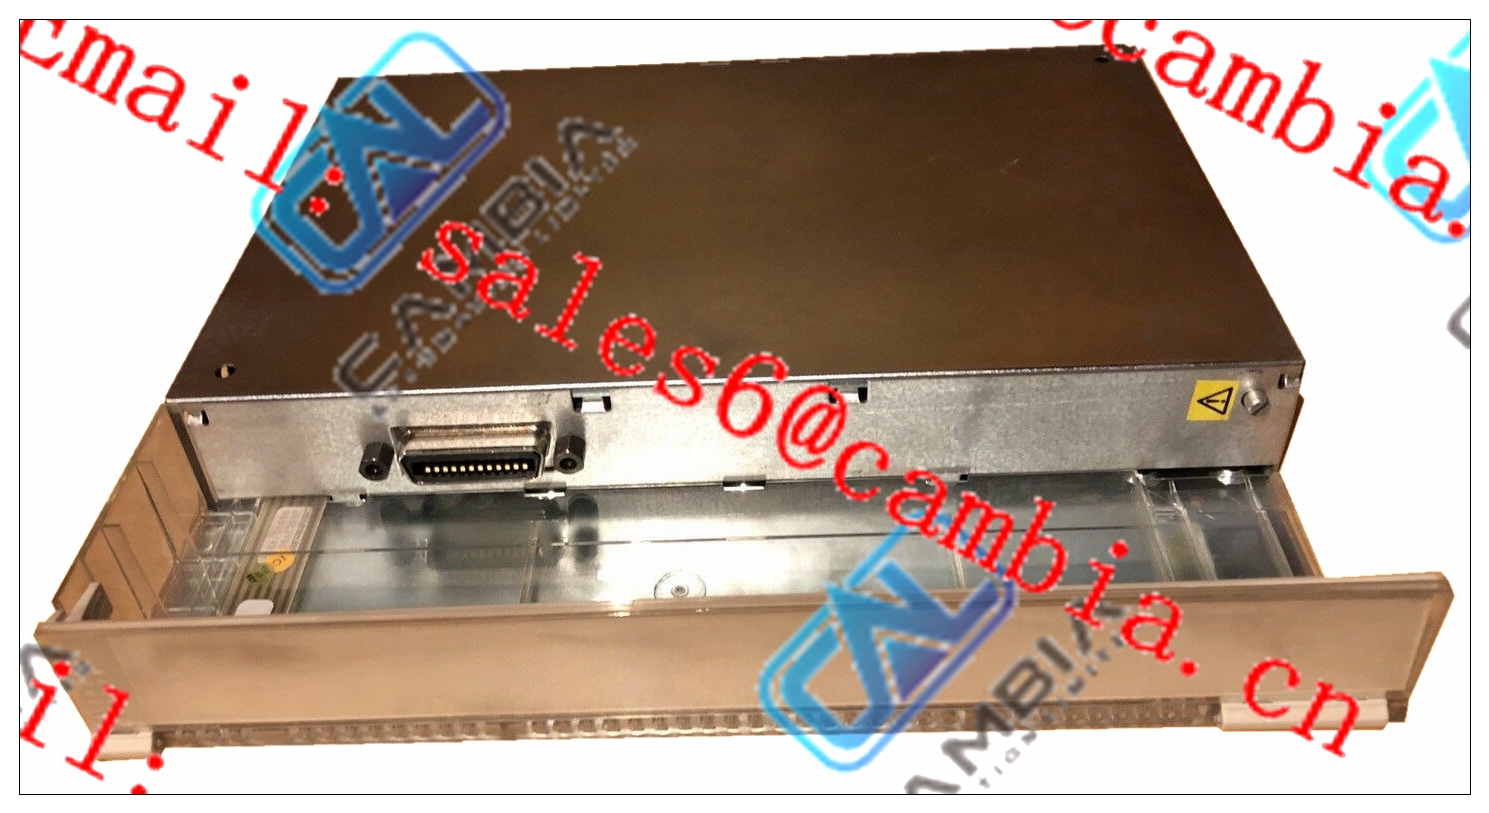 3HAC025338-004	Processor Interface Adaptor